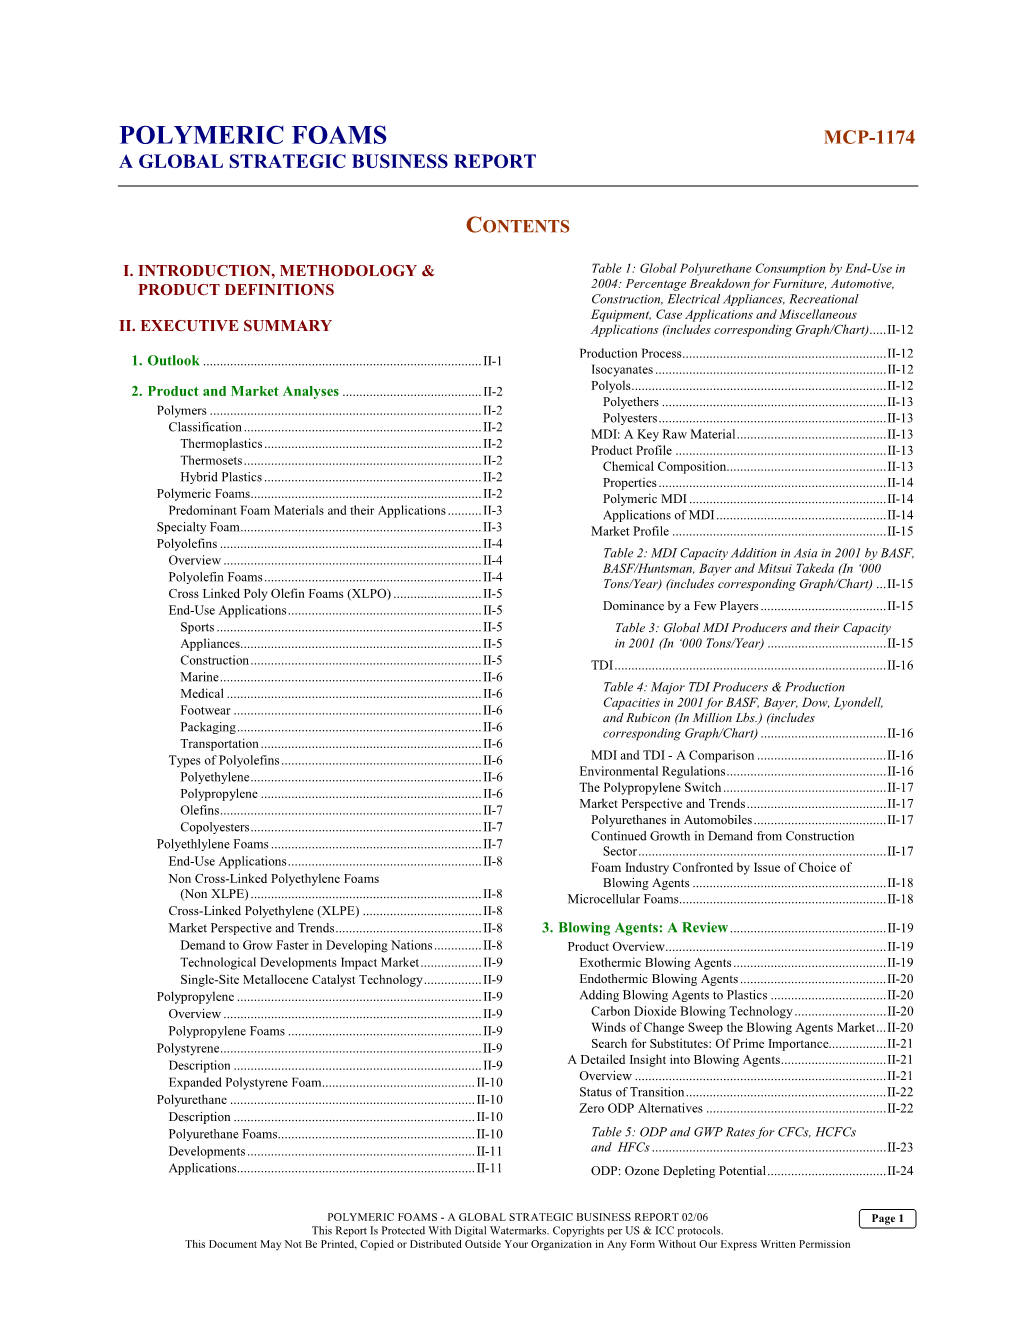 Polymeric Foams Mcp-1174 a Global Strategic Business Report